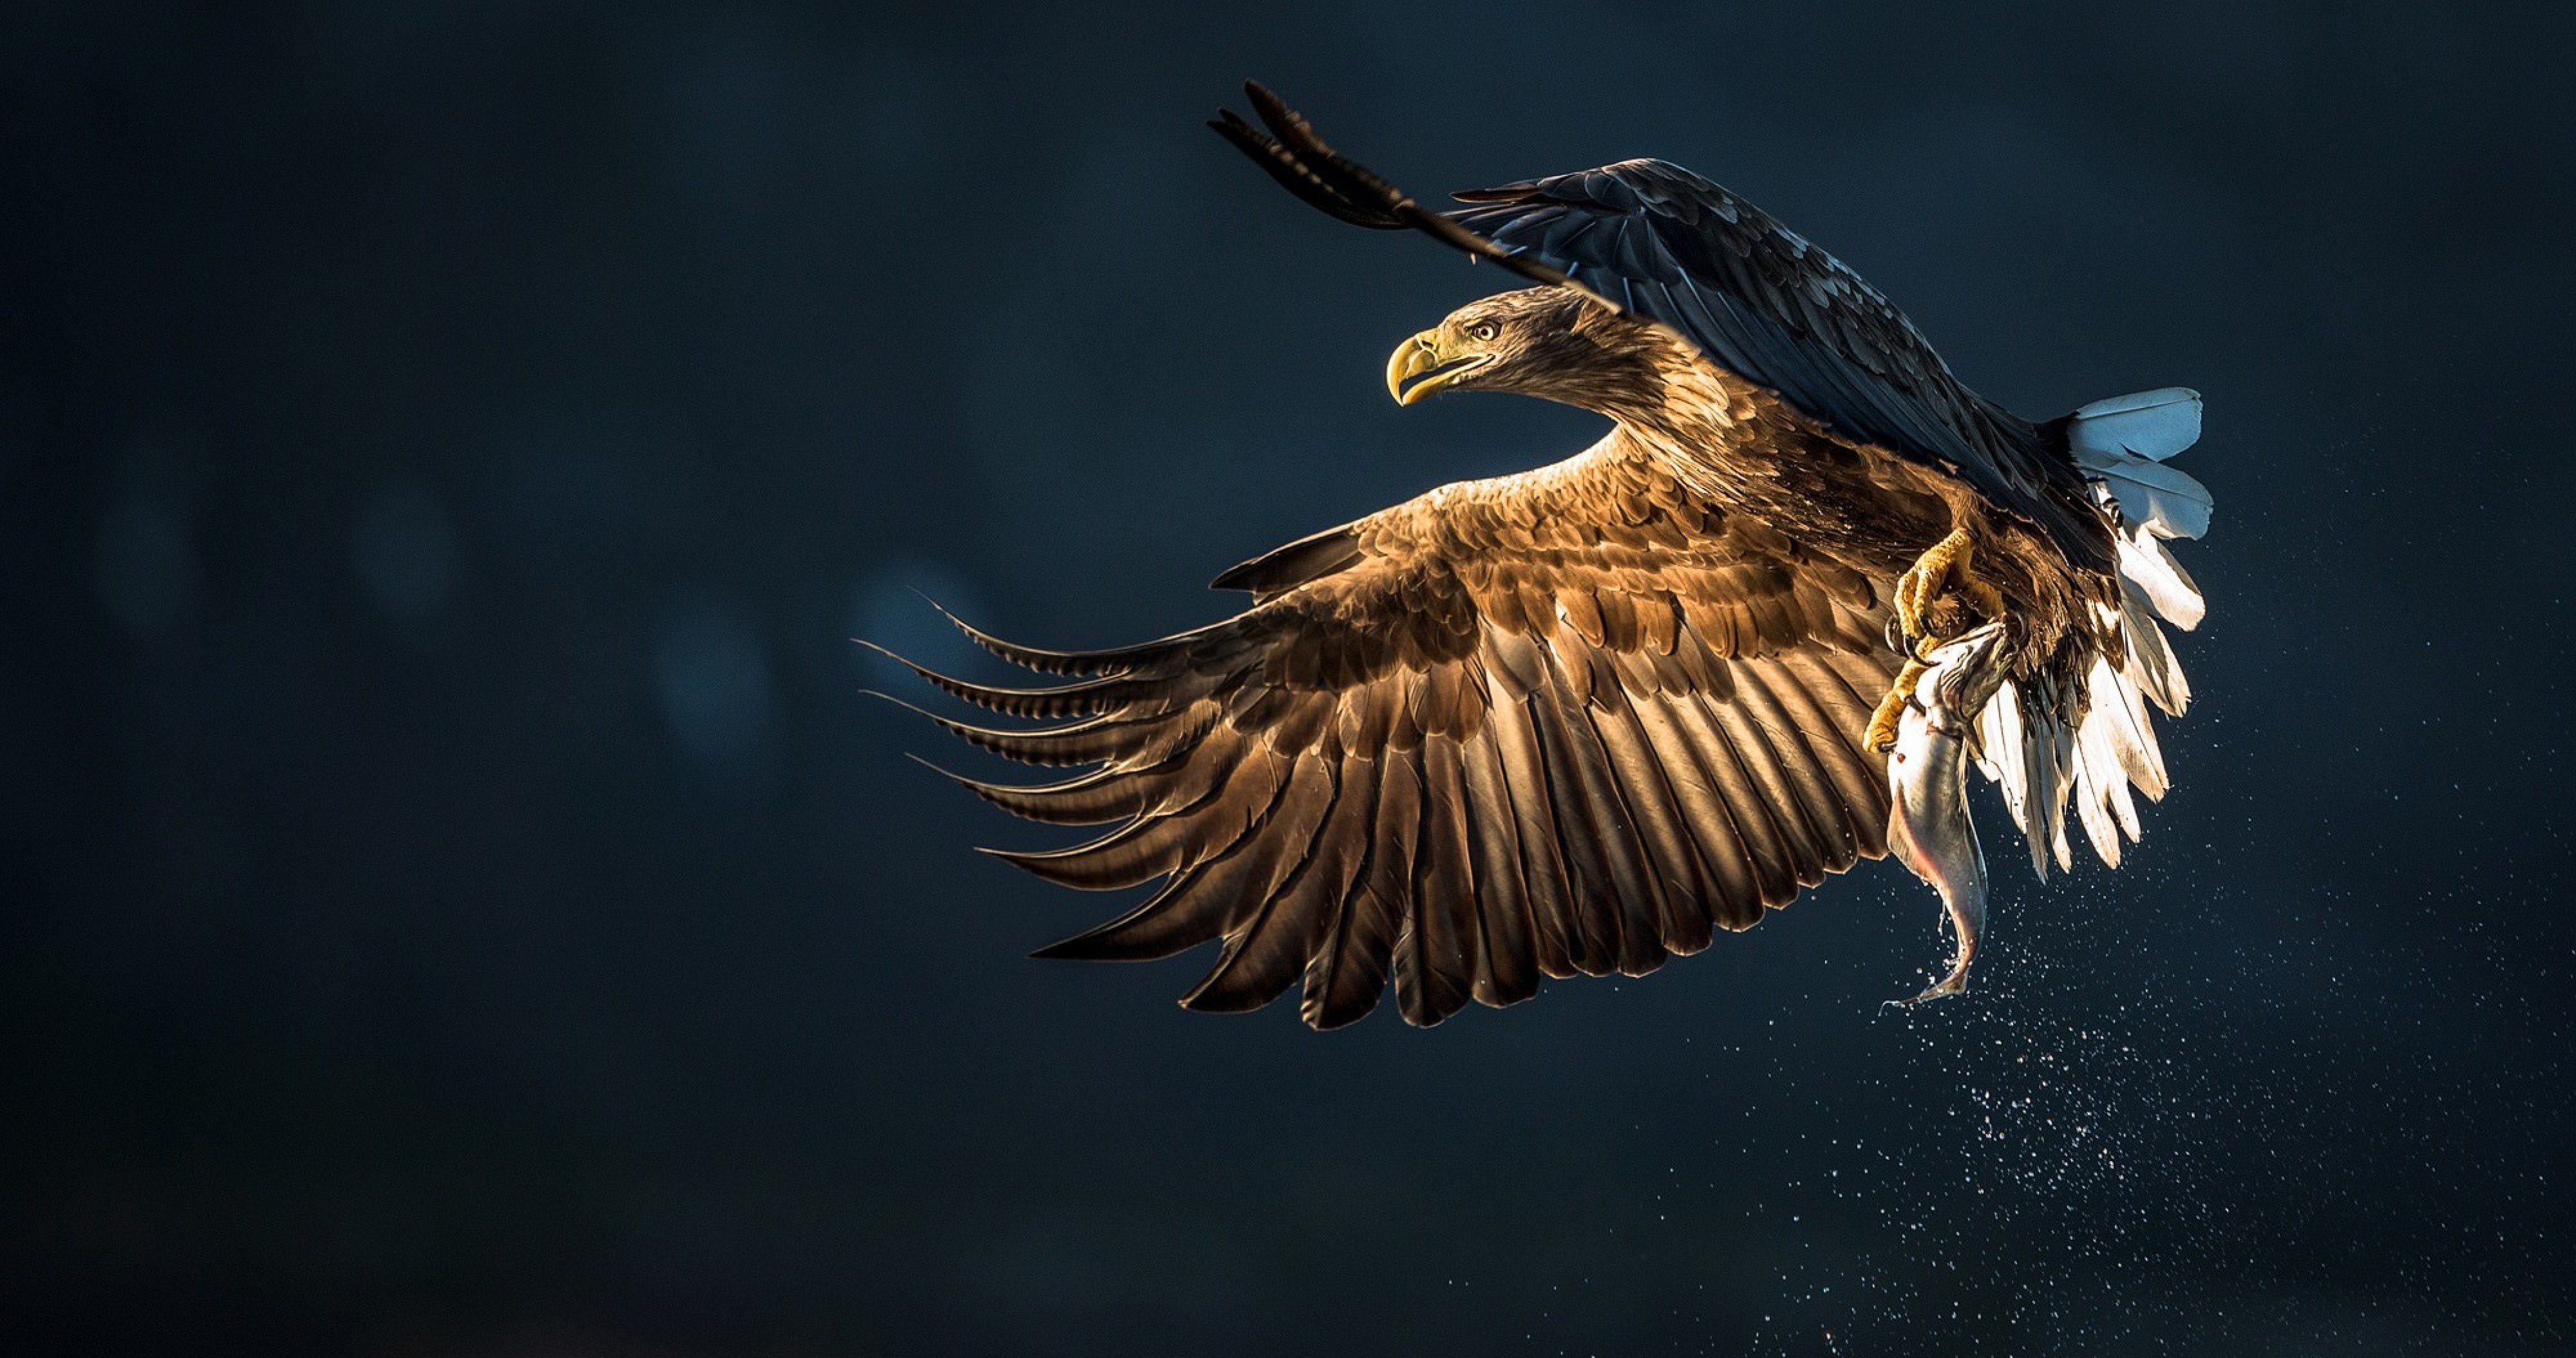 eagle bird catch fish 4k ultra HD wallpaper. Birds wallpaper hd, Pet birds, Eagle picture